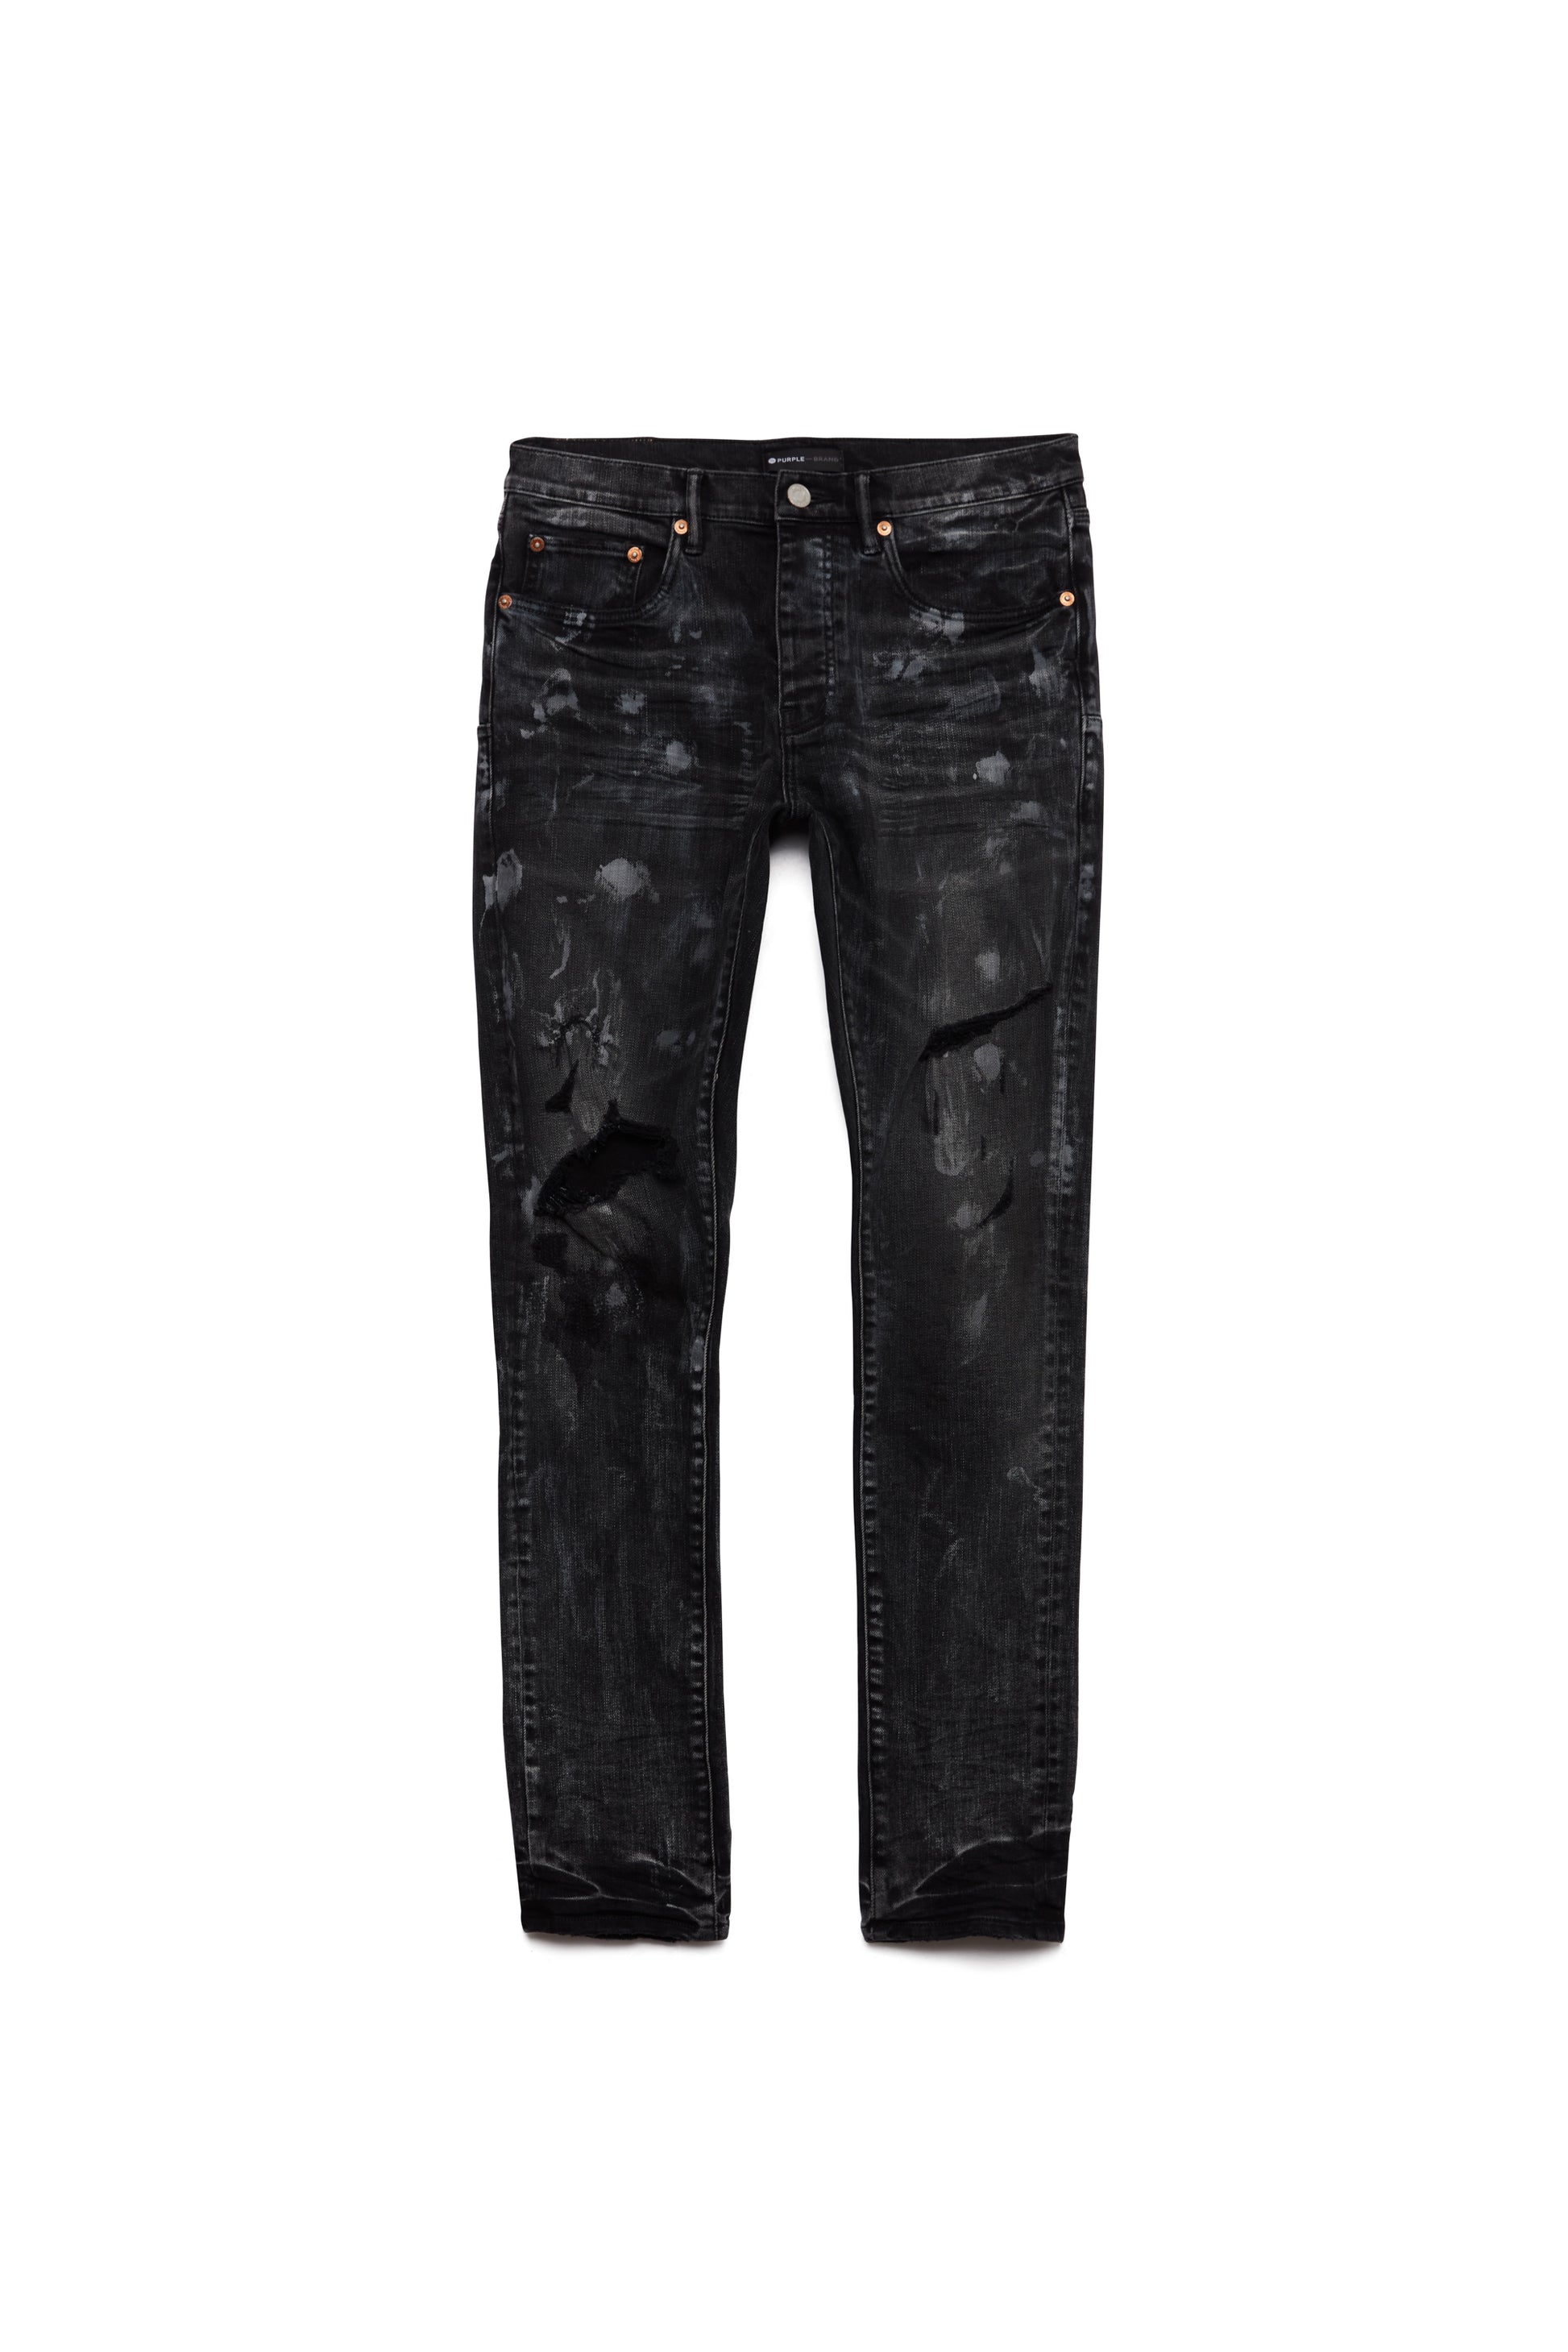 PURPLE BRAND - Men's Denim Jean - Low Rise Skinny - Style No. P001 - Super Fade Black Weft Repair - Front